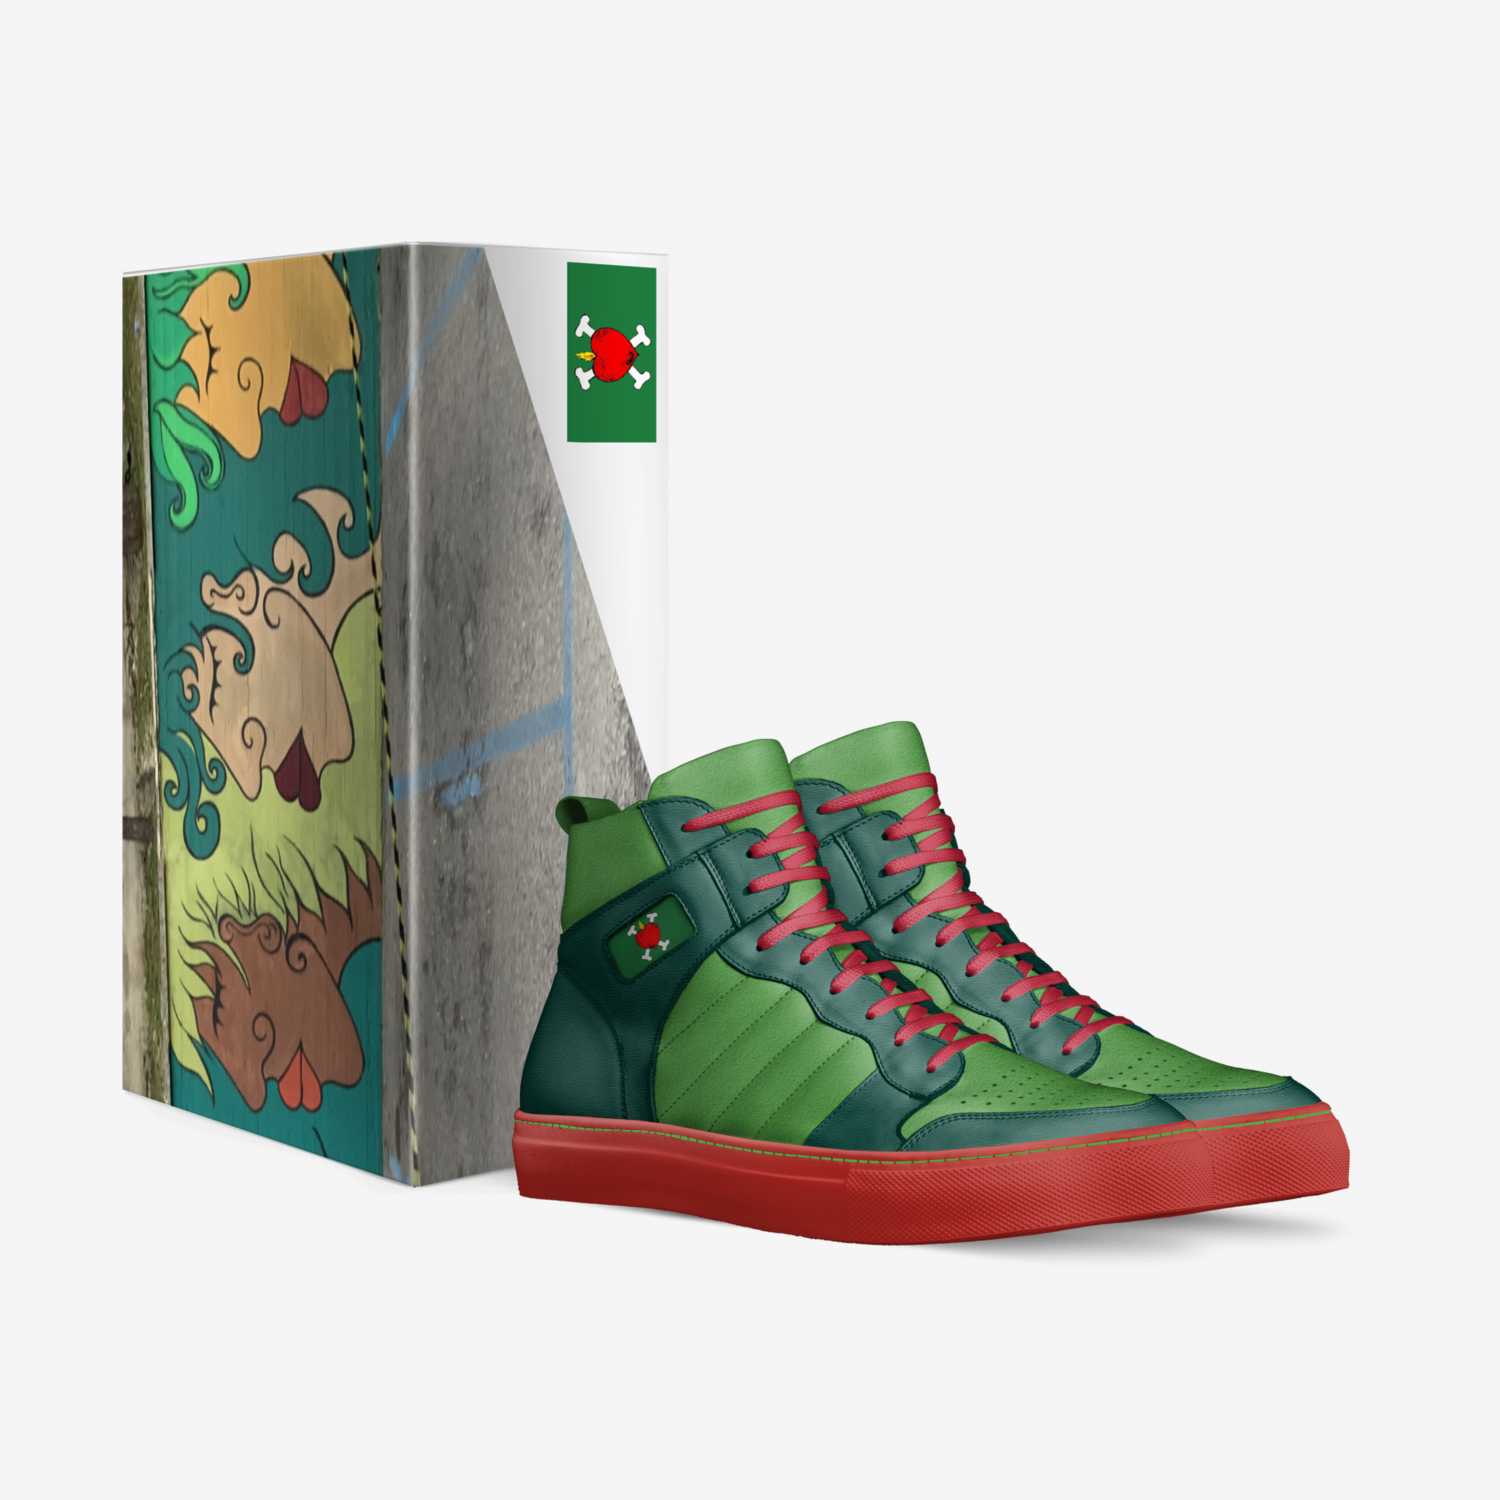 Nattura custom made in Italy shoes by William Vecchietti | Box view